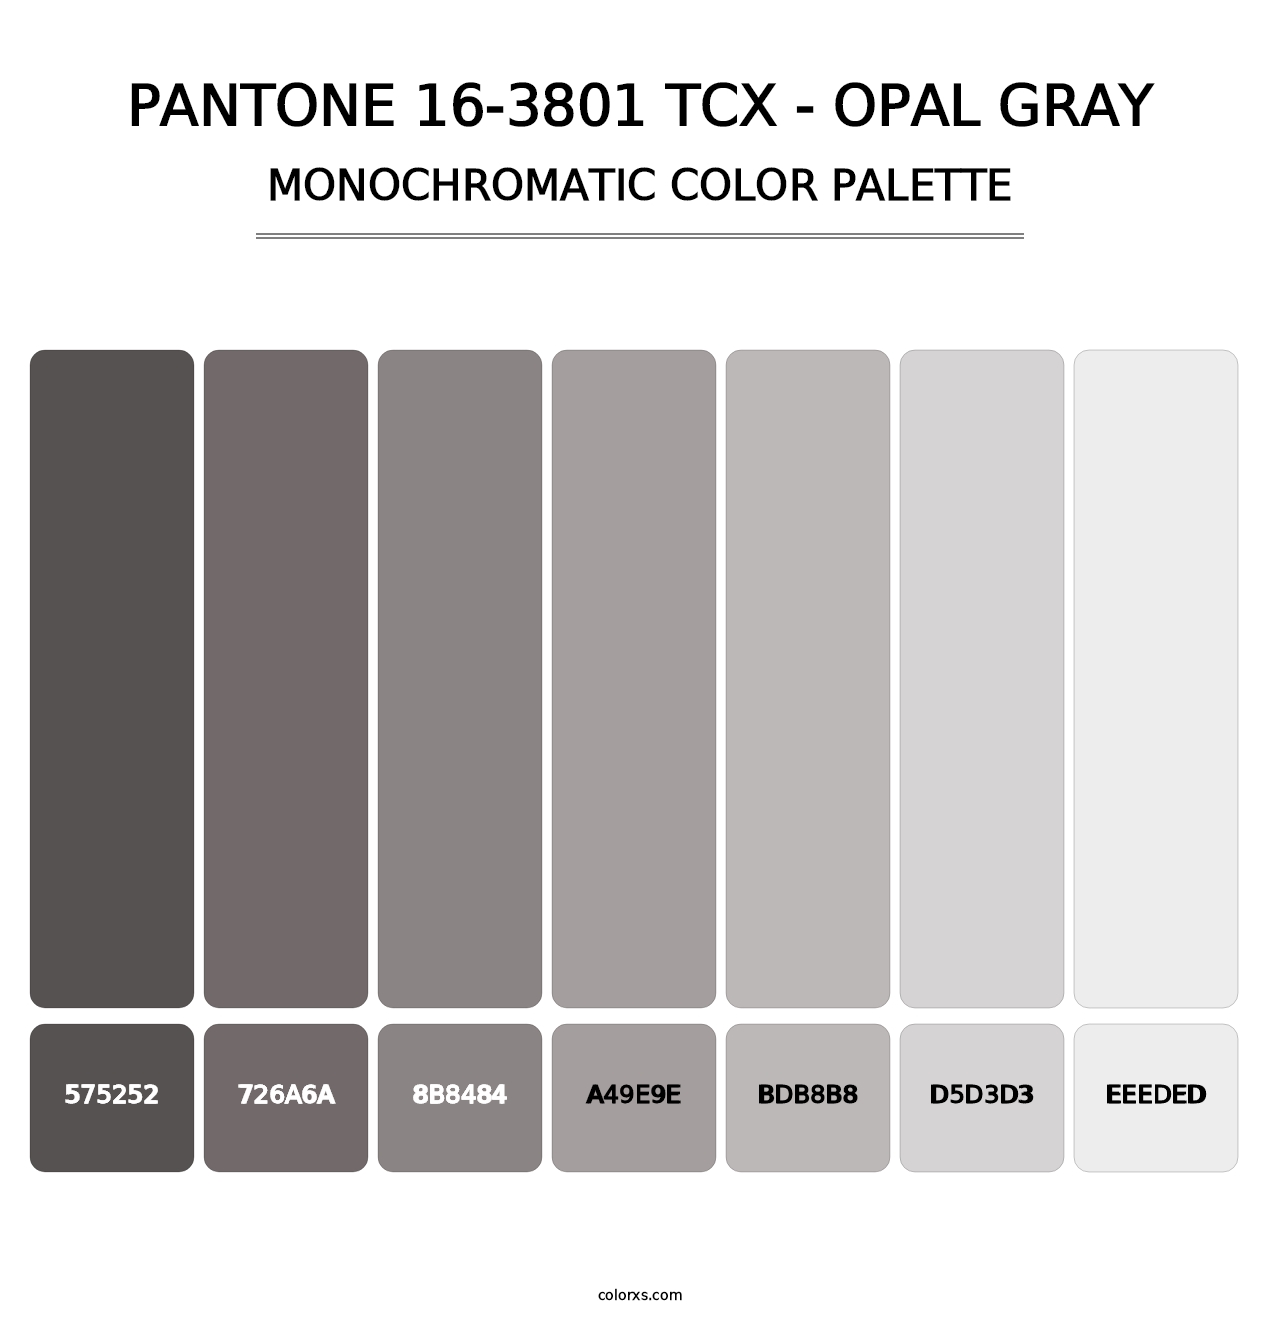 PANTONE 16-3801 TCX - Opal Gray - Monochromatic Color Palette